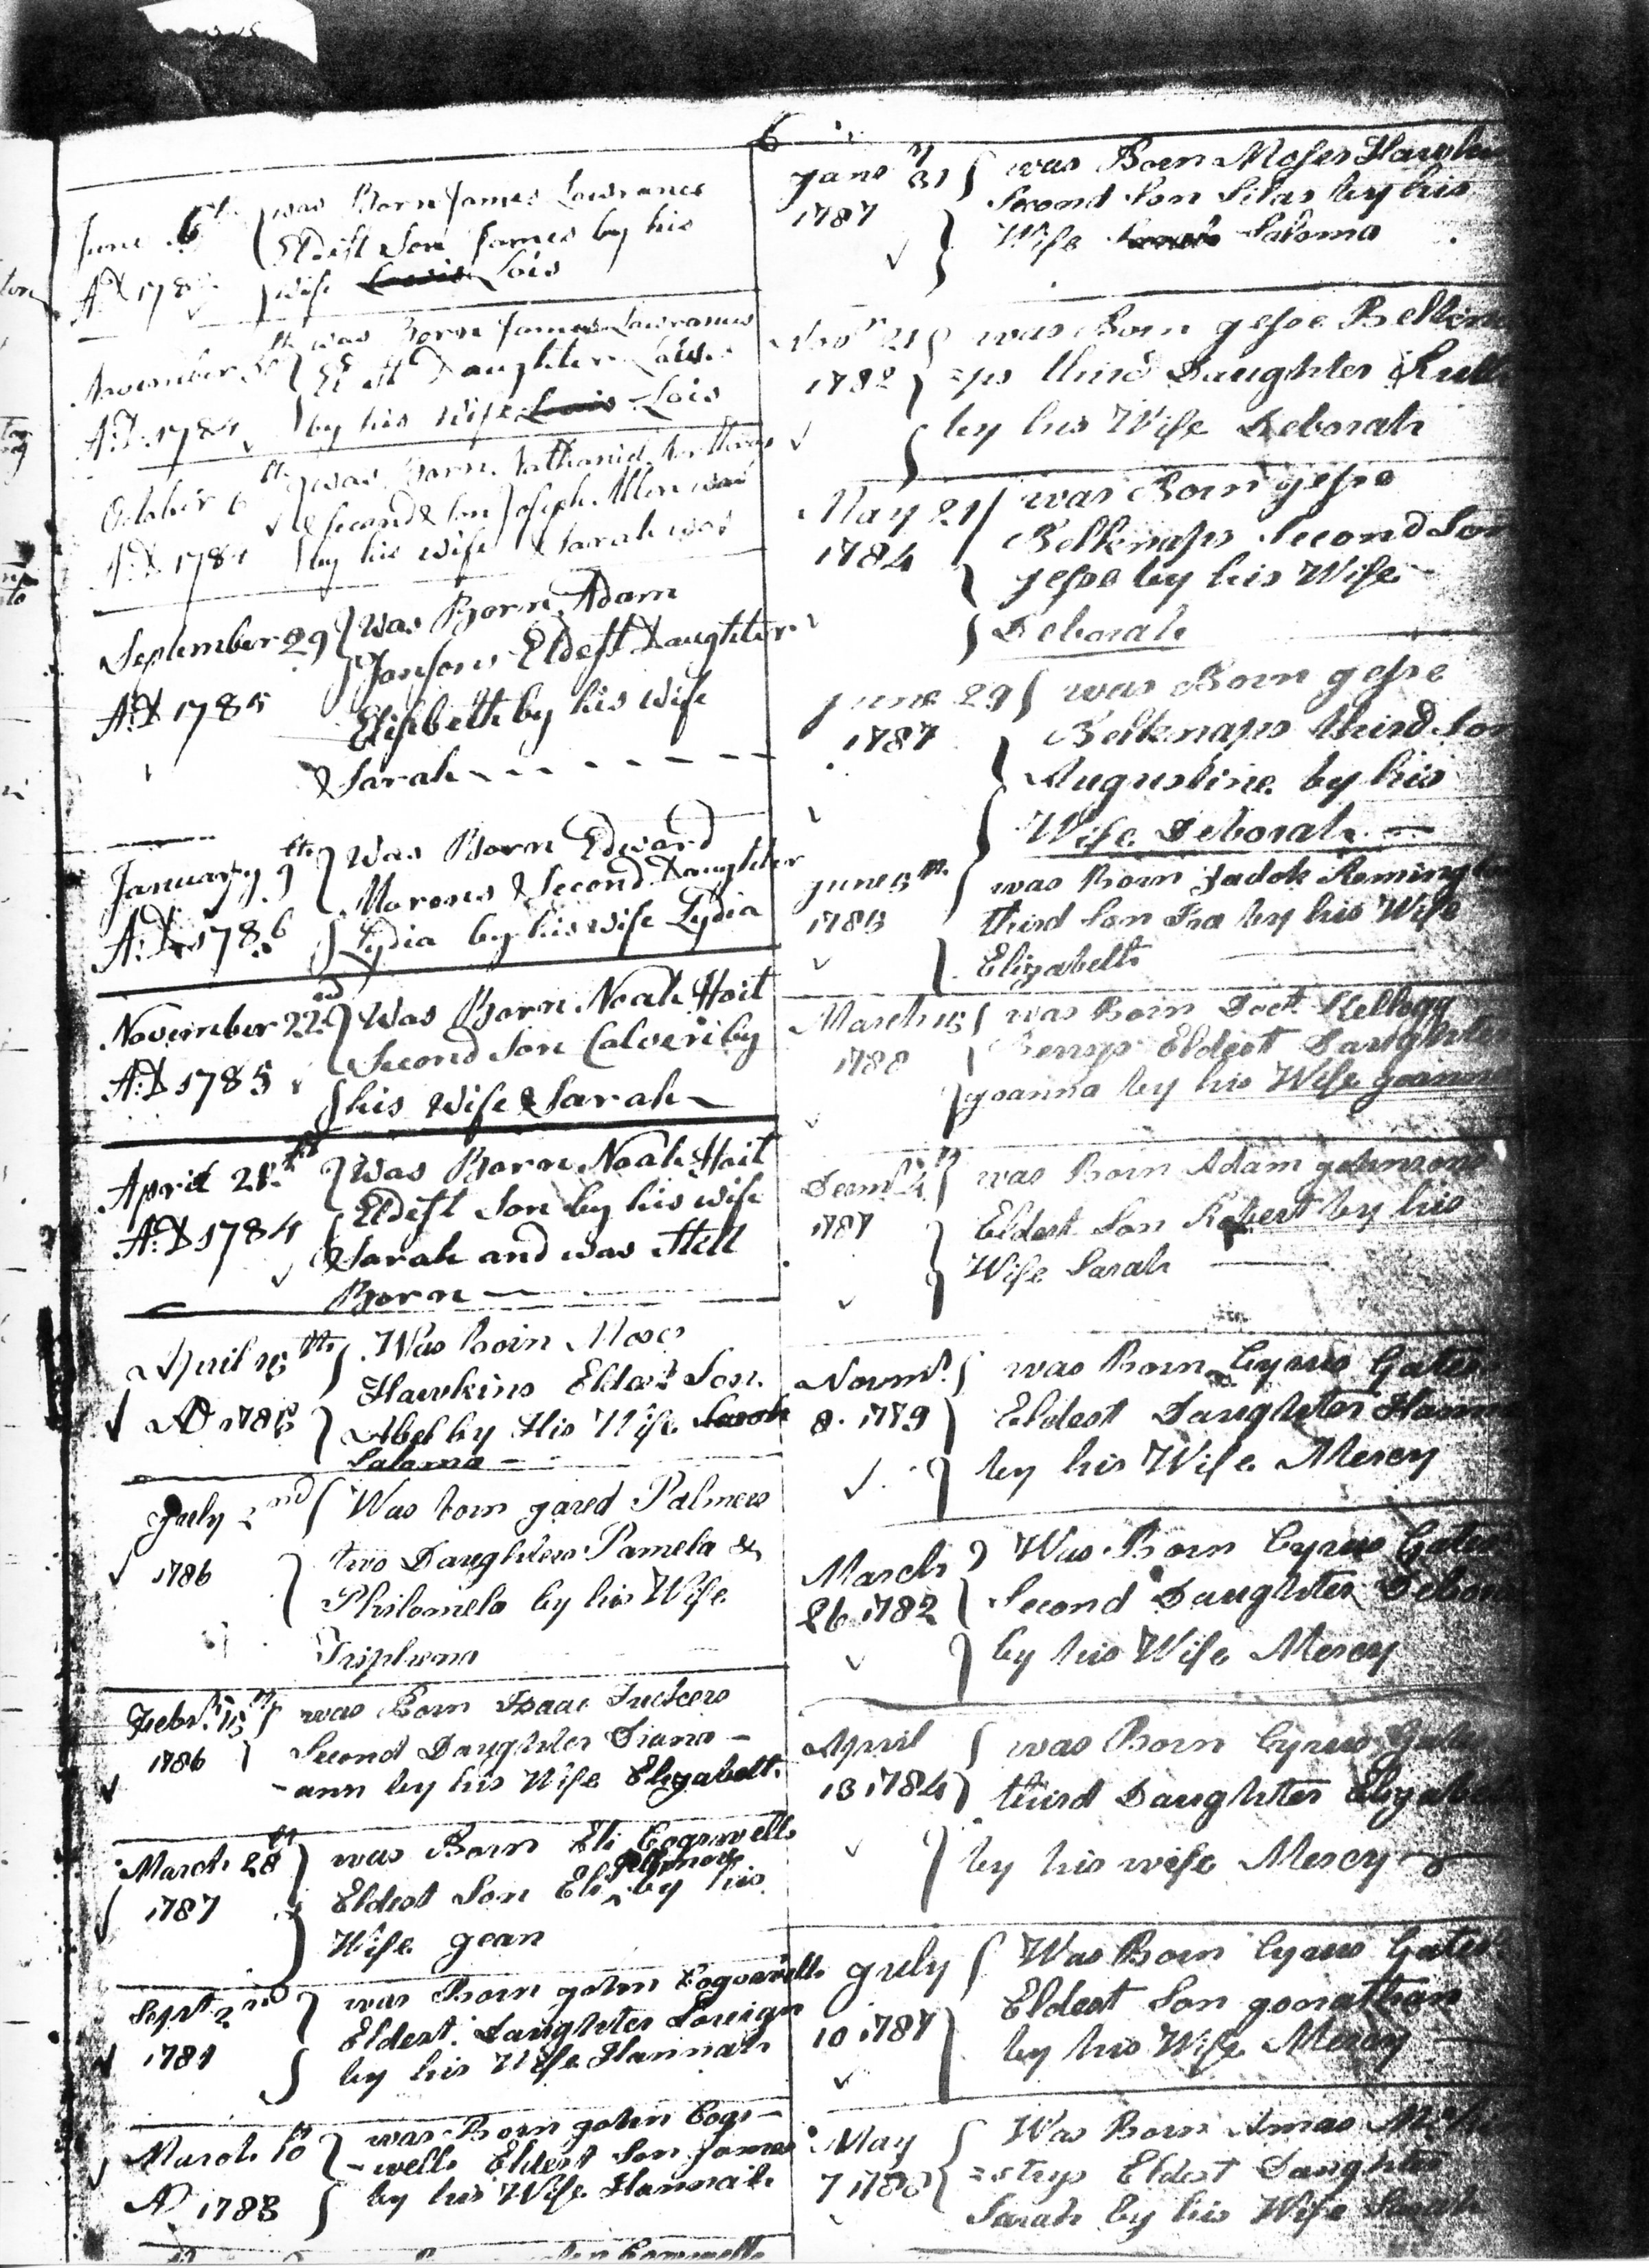 Jesse Belknap (1739-after 1818) : Belnap Family Organization